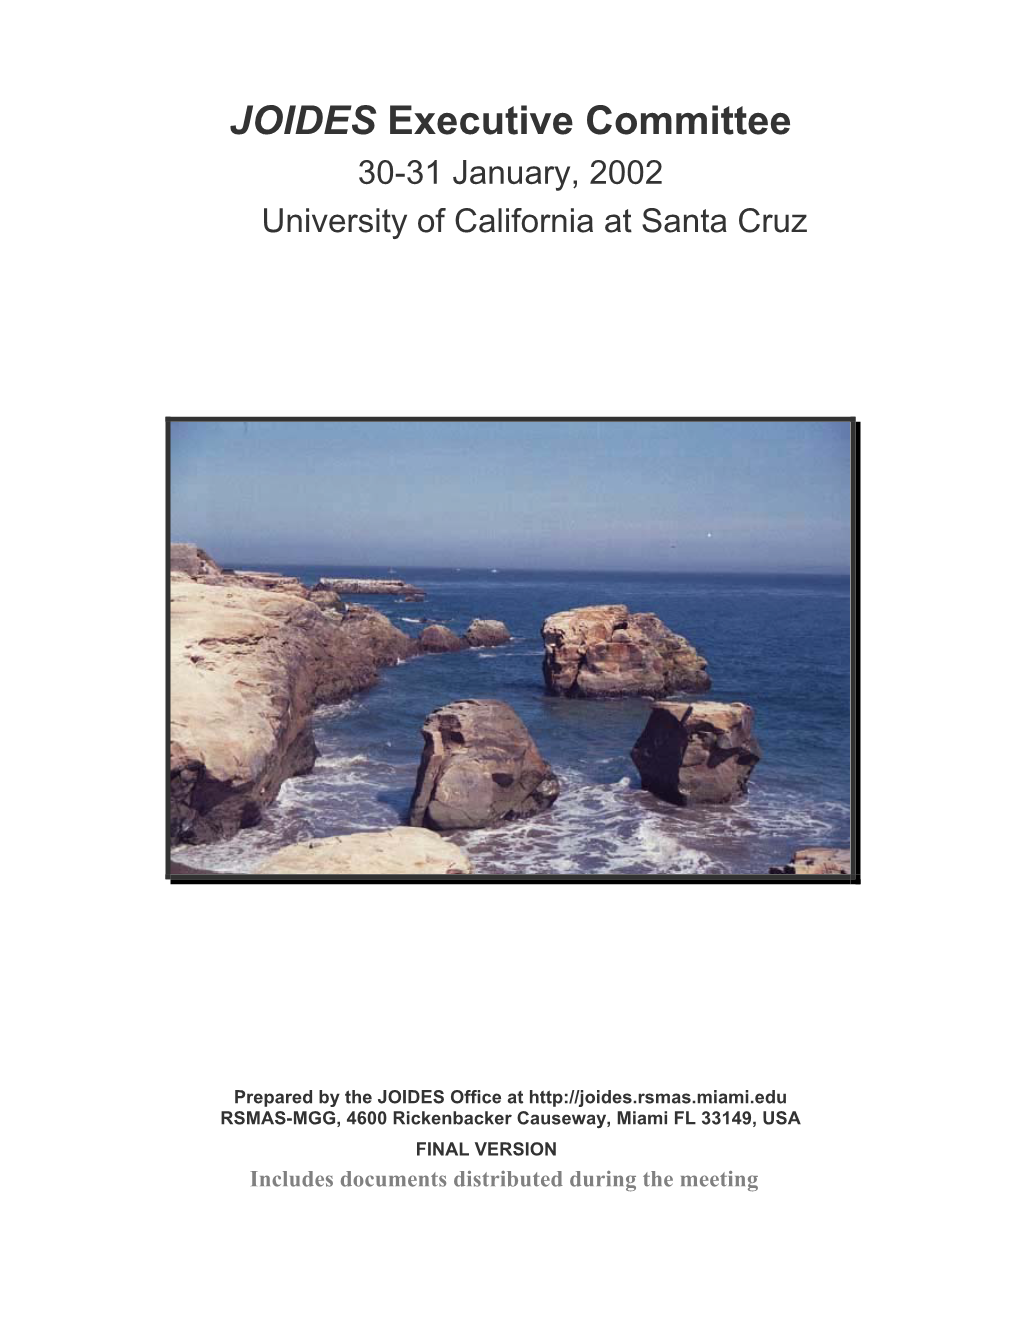 JOIDES Executive Committee 30-31 January, 2002 University of California at Santa Cruz